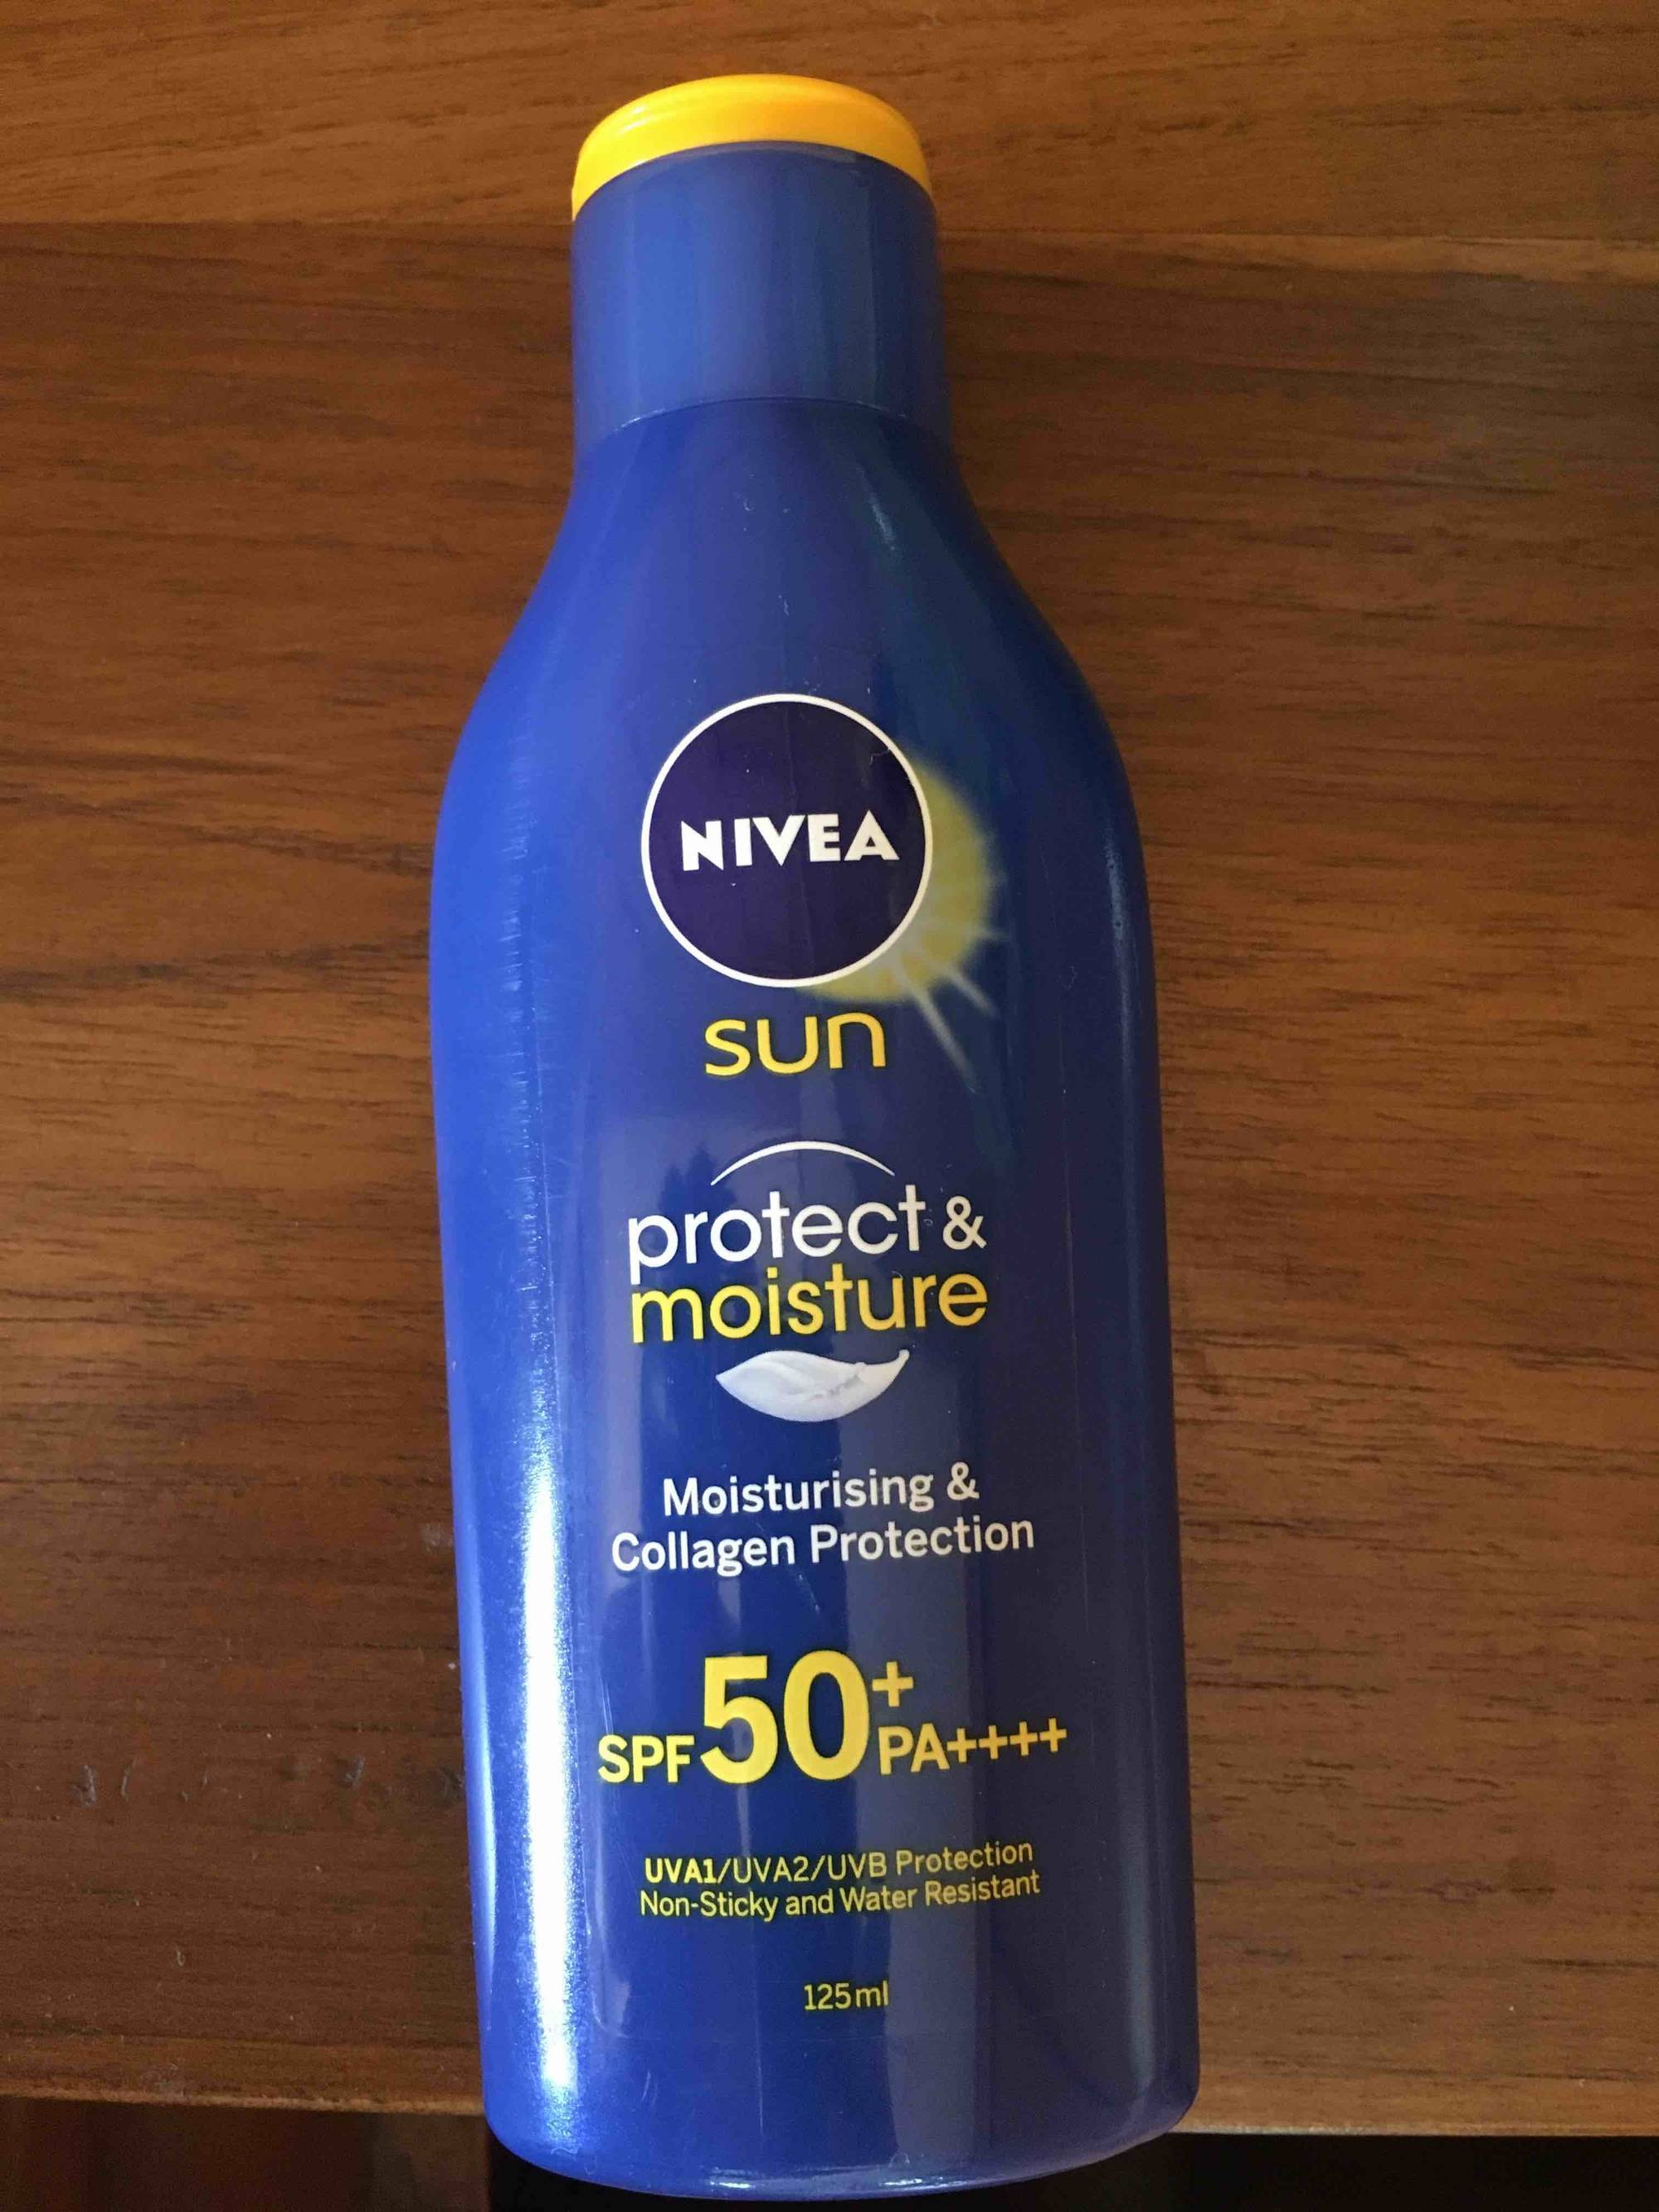 NIVEA - Sun protect & moisture SPF 50+ PA++